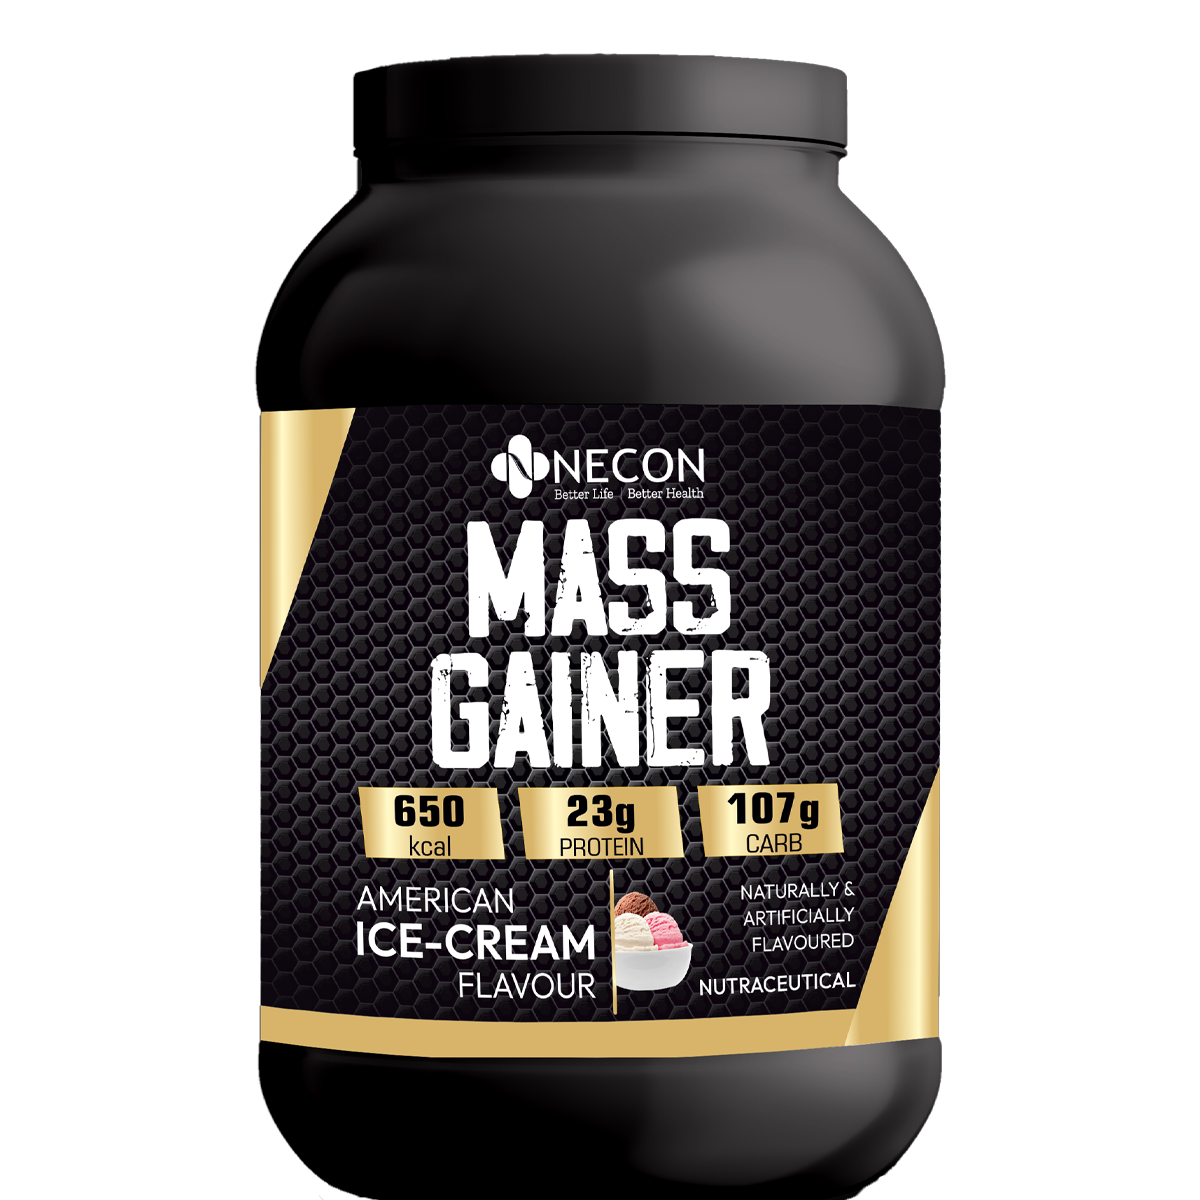 Necon Mass High Protein High Calorie Weight Gainer Powder Flavor American Ice-Cream -1 kg with Vitamins and Minerals, Vegetarian